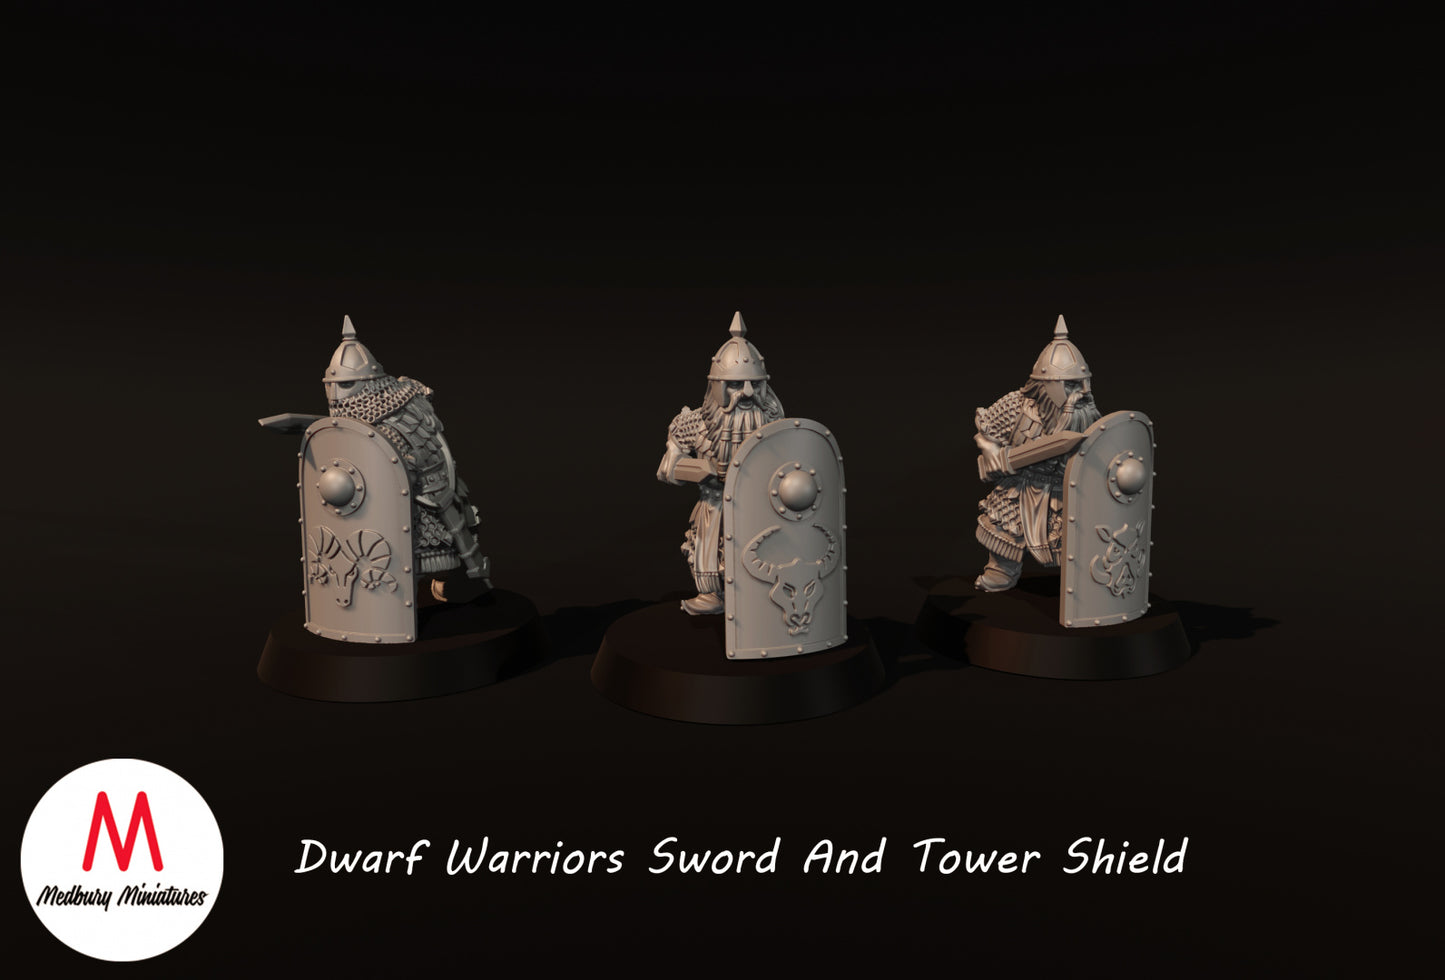 Dwarf Warriors with Swords